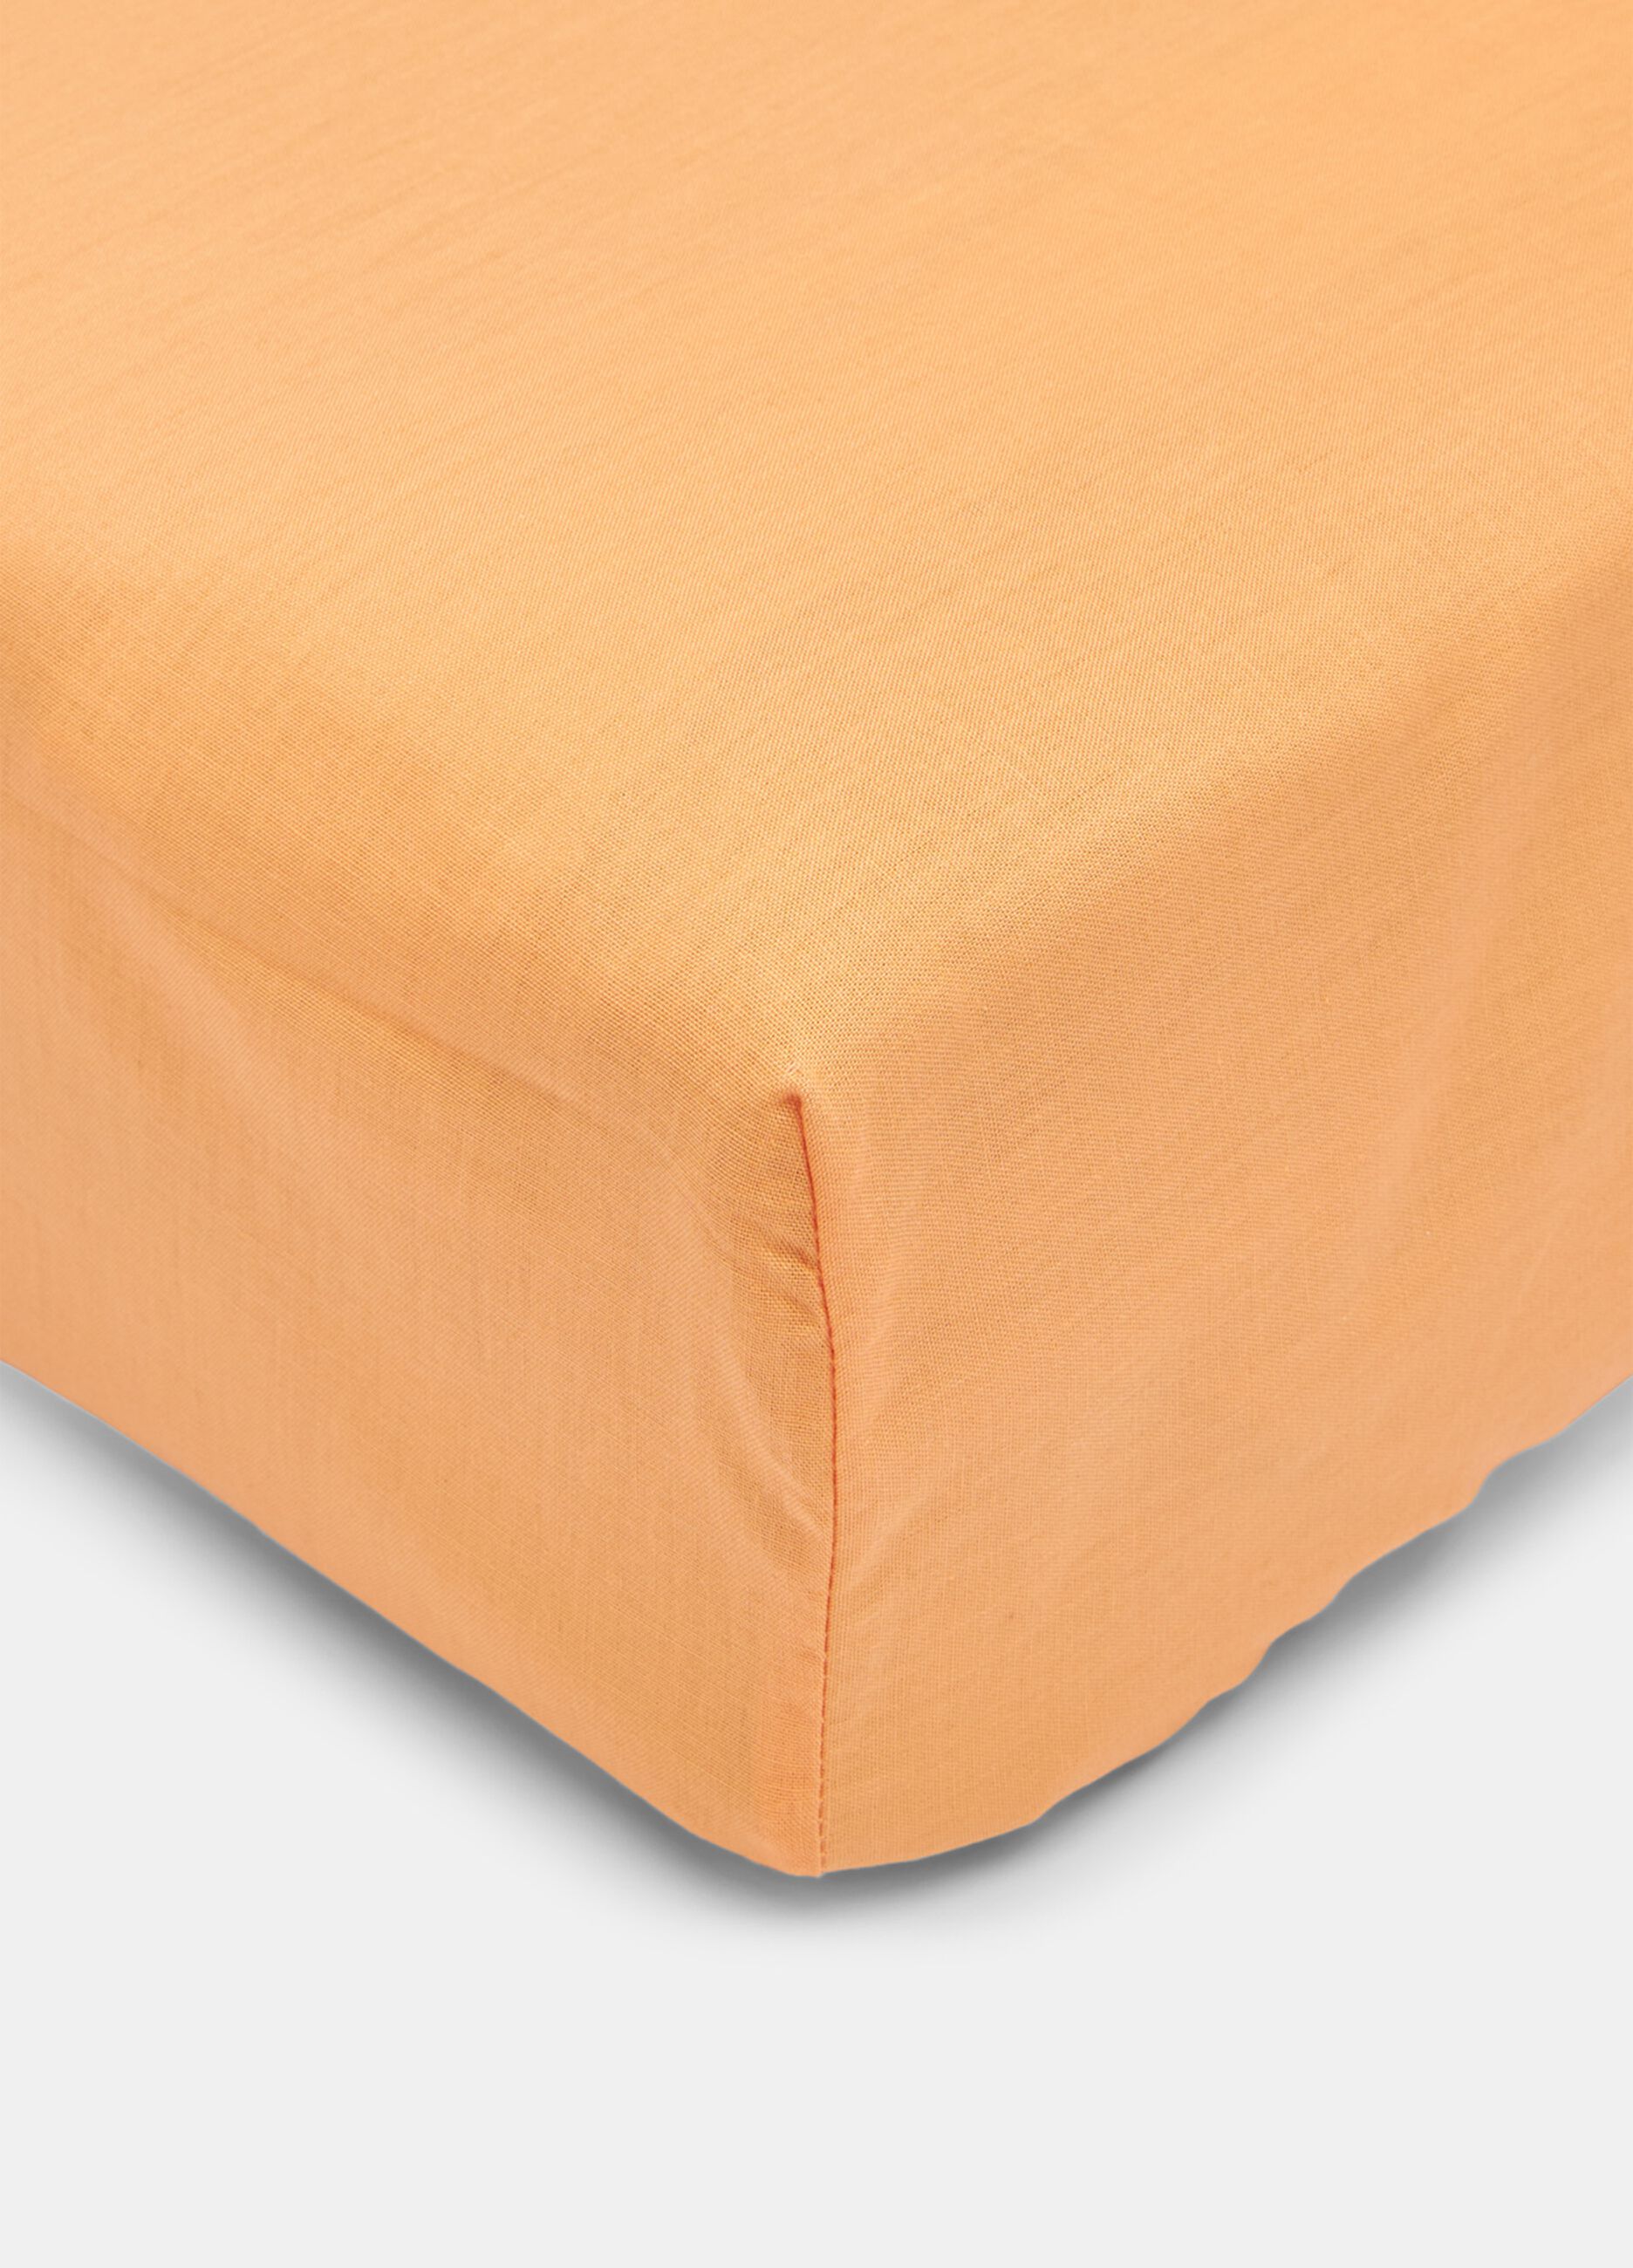 Sábana bajera ajustable cama doble de algodón 100%